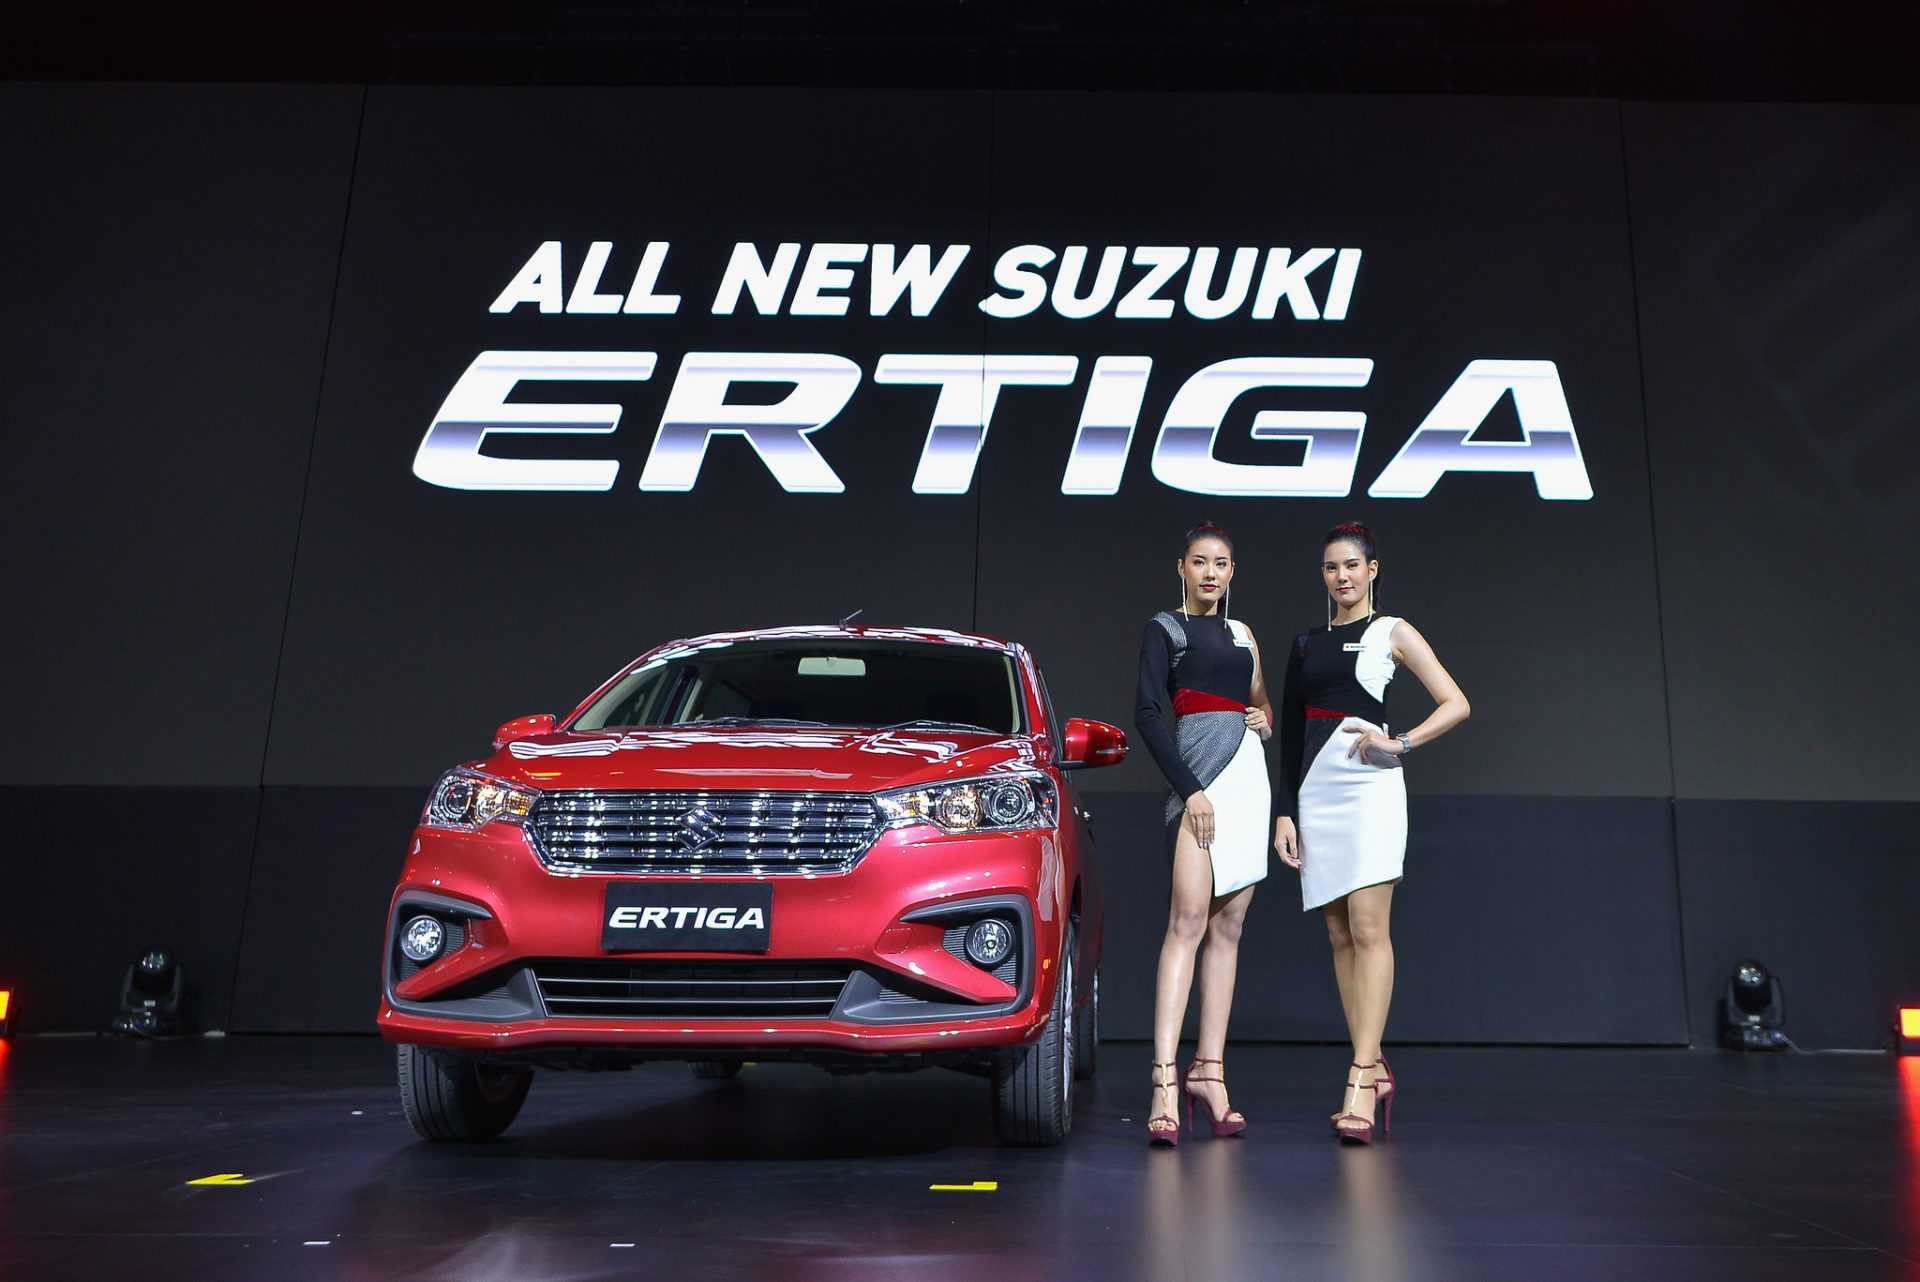 Suzuki เปิดตัว All New ERTIGA รถสำหรับครอบครัว 7 ที่นั่งรุ่นล่าสุด ราคาเริ่มต้นแค่ 655,000 บาท!